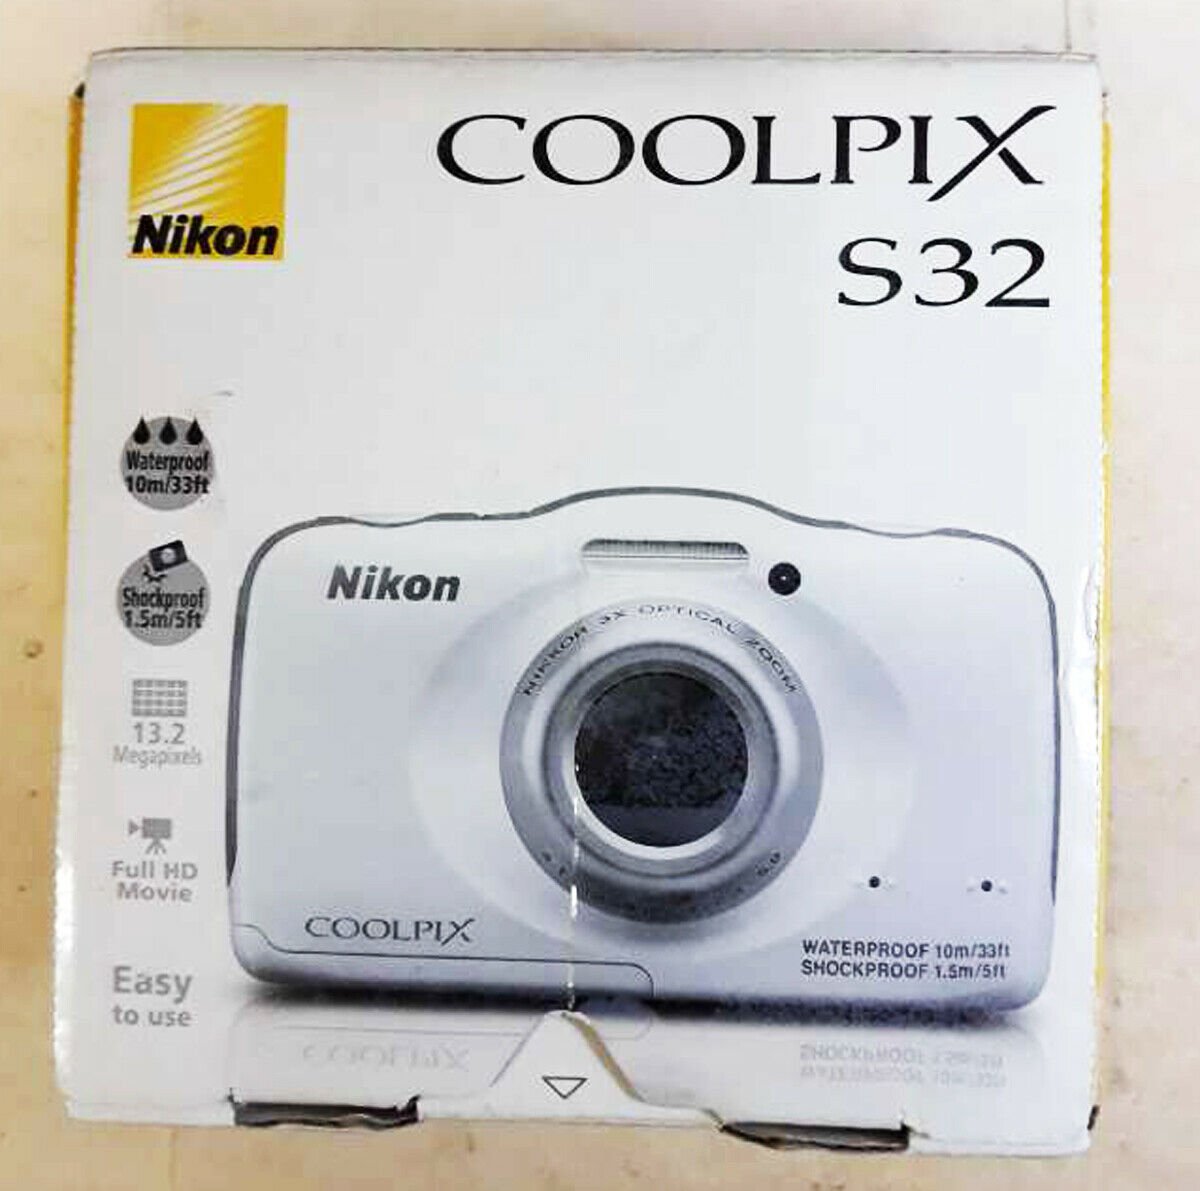 Nikon COOLPIX S32 13.2MP Digital Camera - White